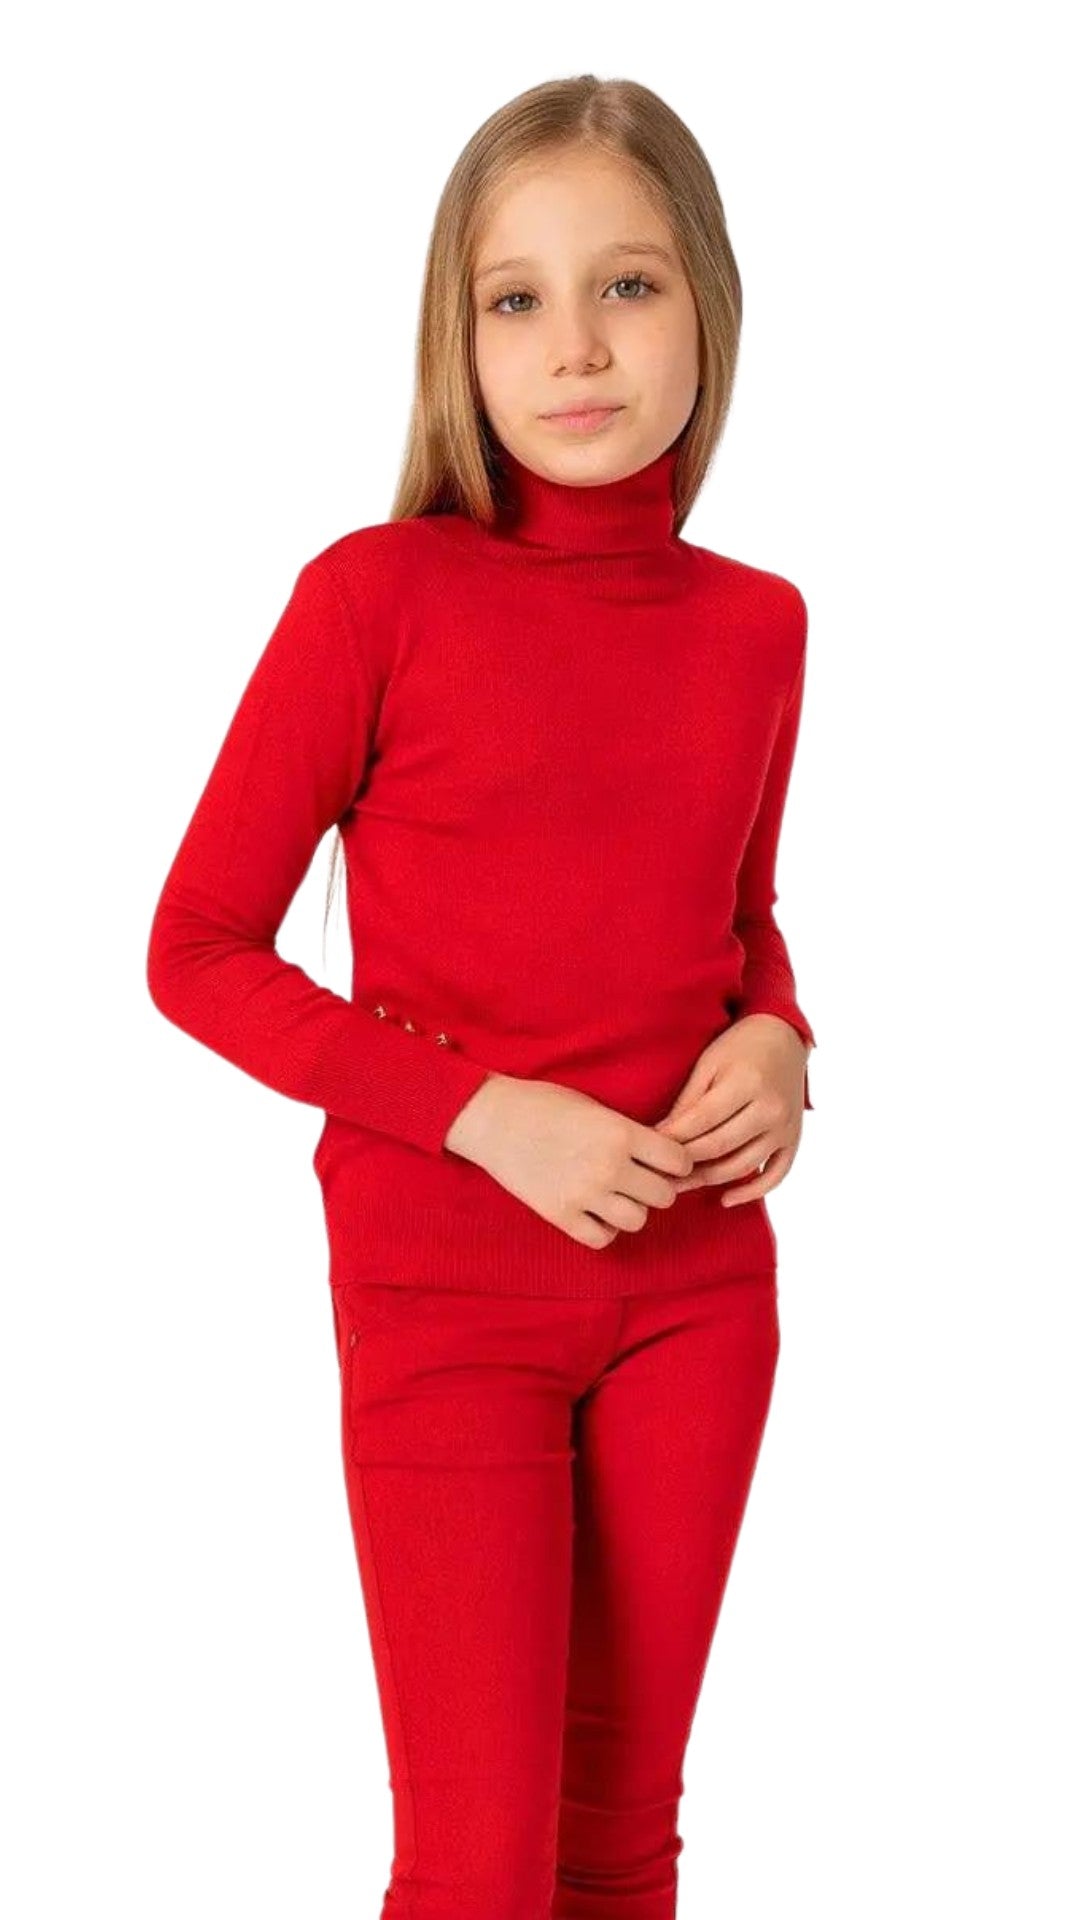 InCity Girls Tween 7-14 Years Red Black Turtle Neck Solid Long Sleeve Shelby Sweater InCity Boys & Girls